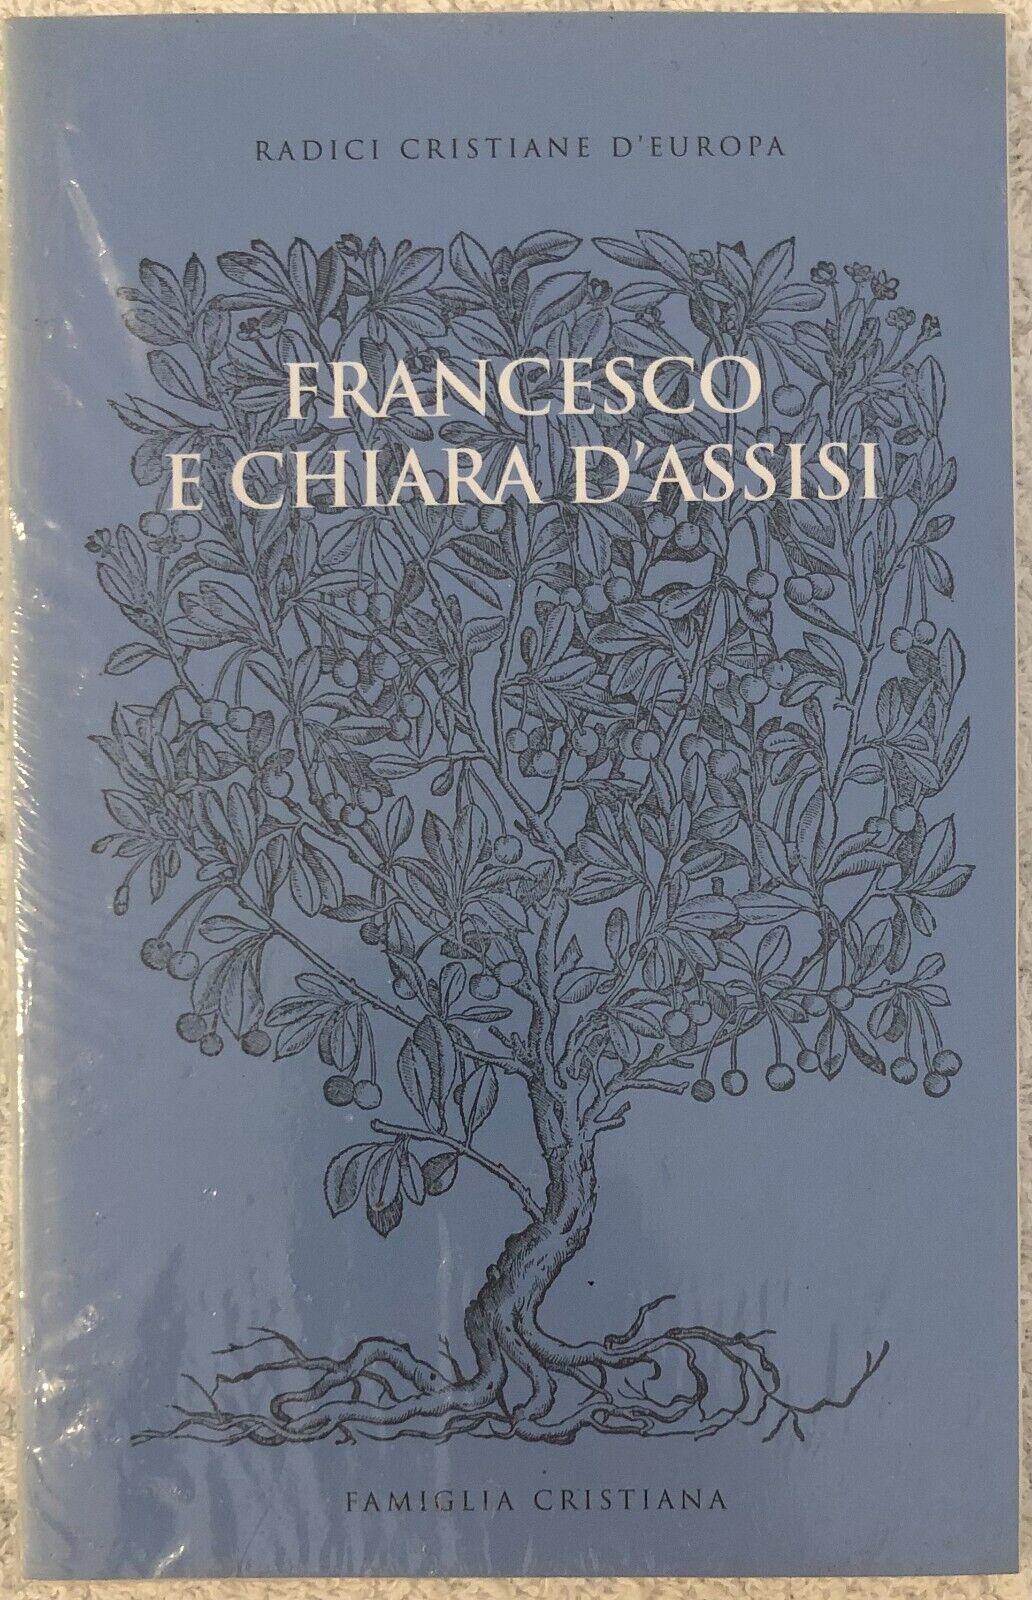 Radici cristiane d'Europa n. 8 - Francesco e Chiara d'Assisi di Aa.vv.,  2004,  